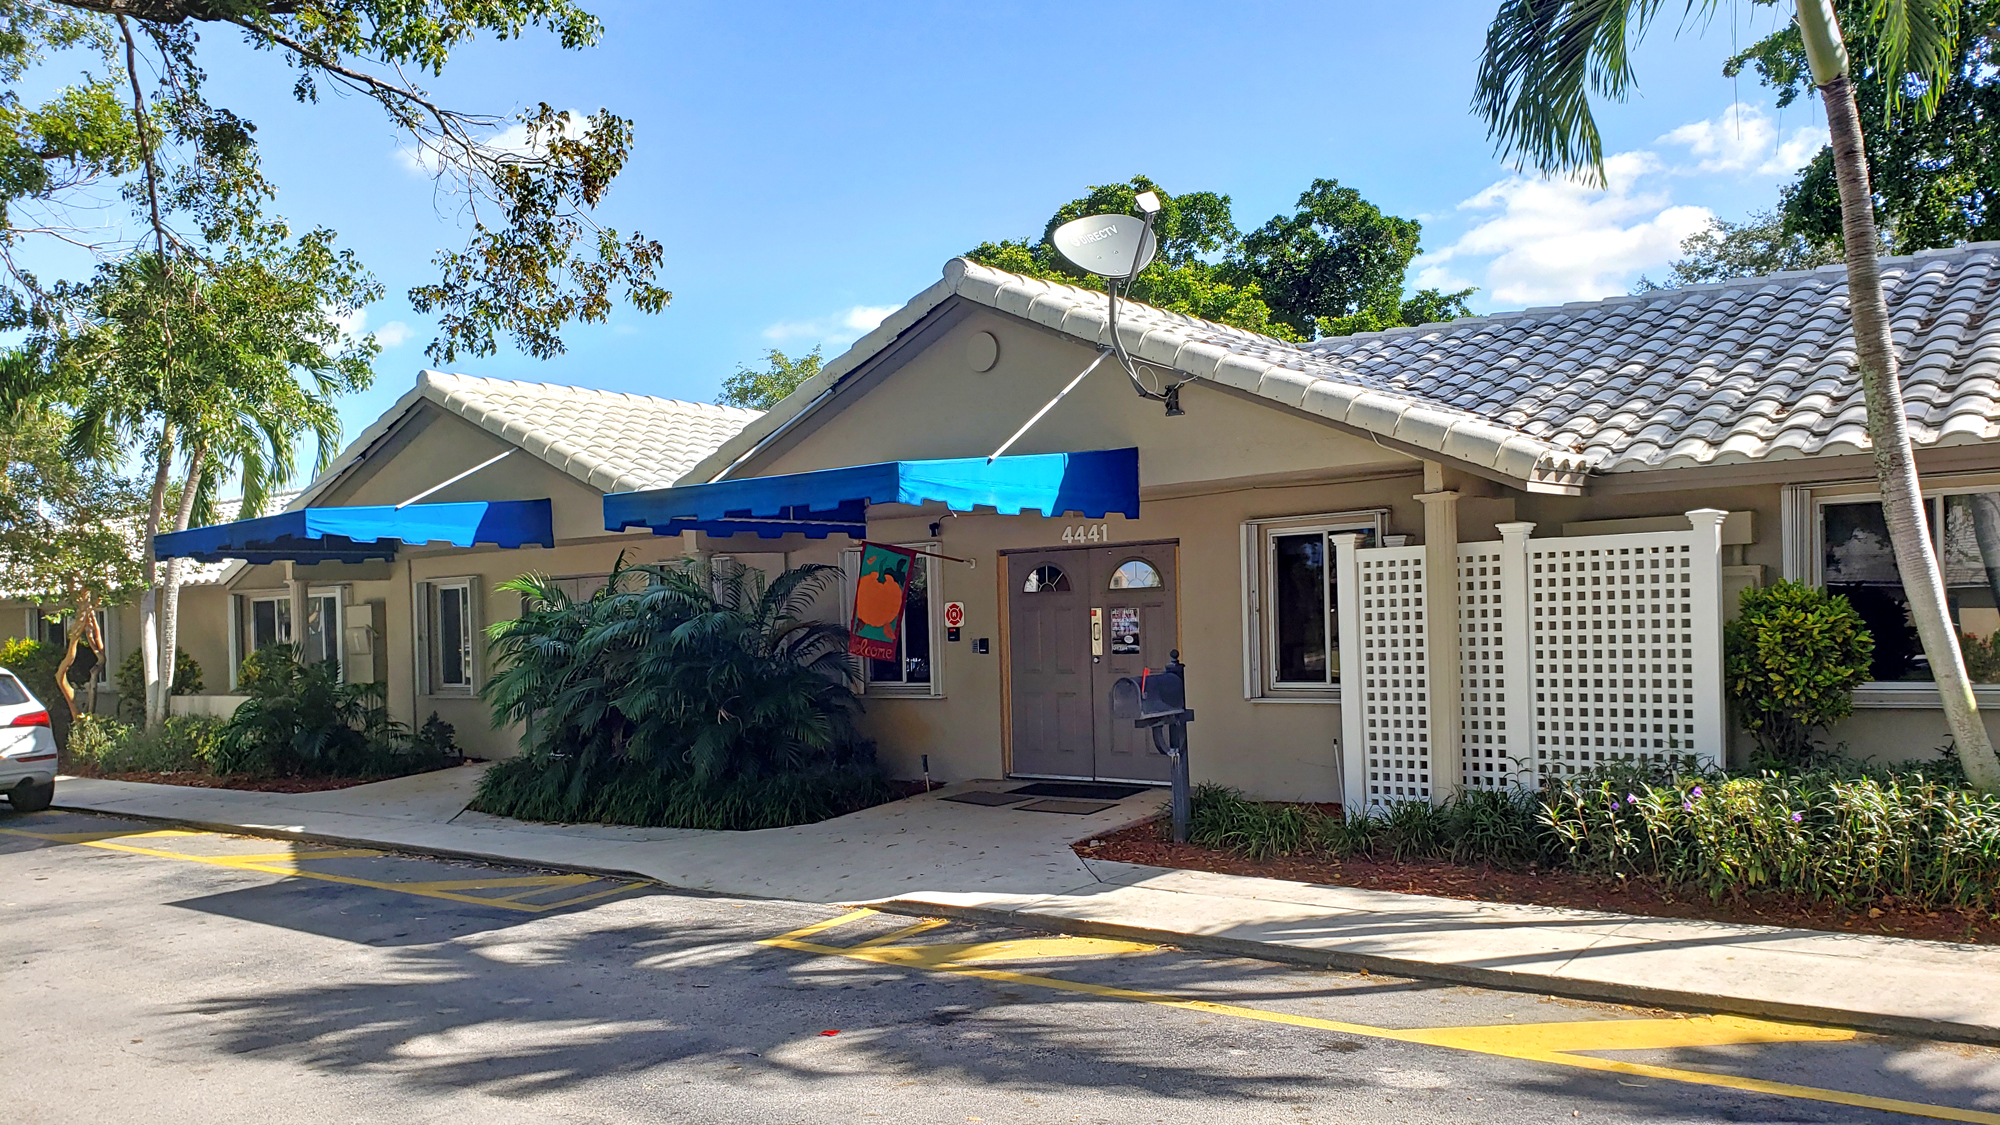 New Preschool in Coral Springs Offers Innovative Education, Special VPK Program